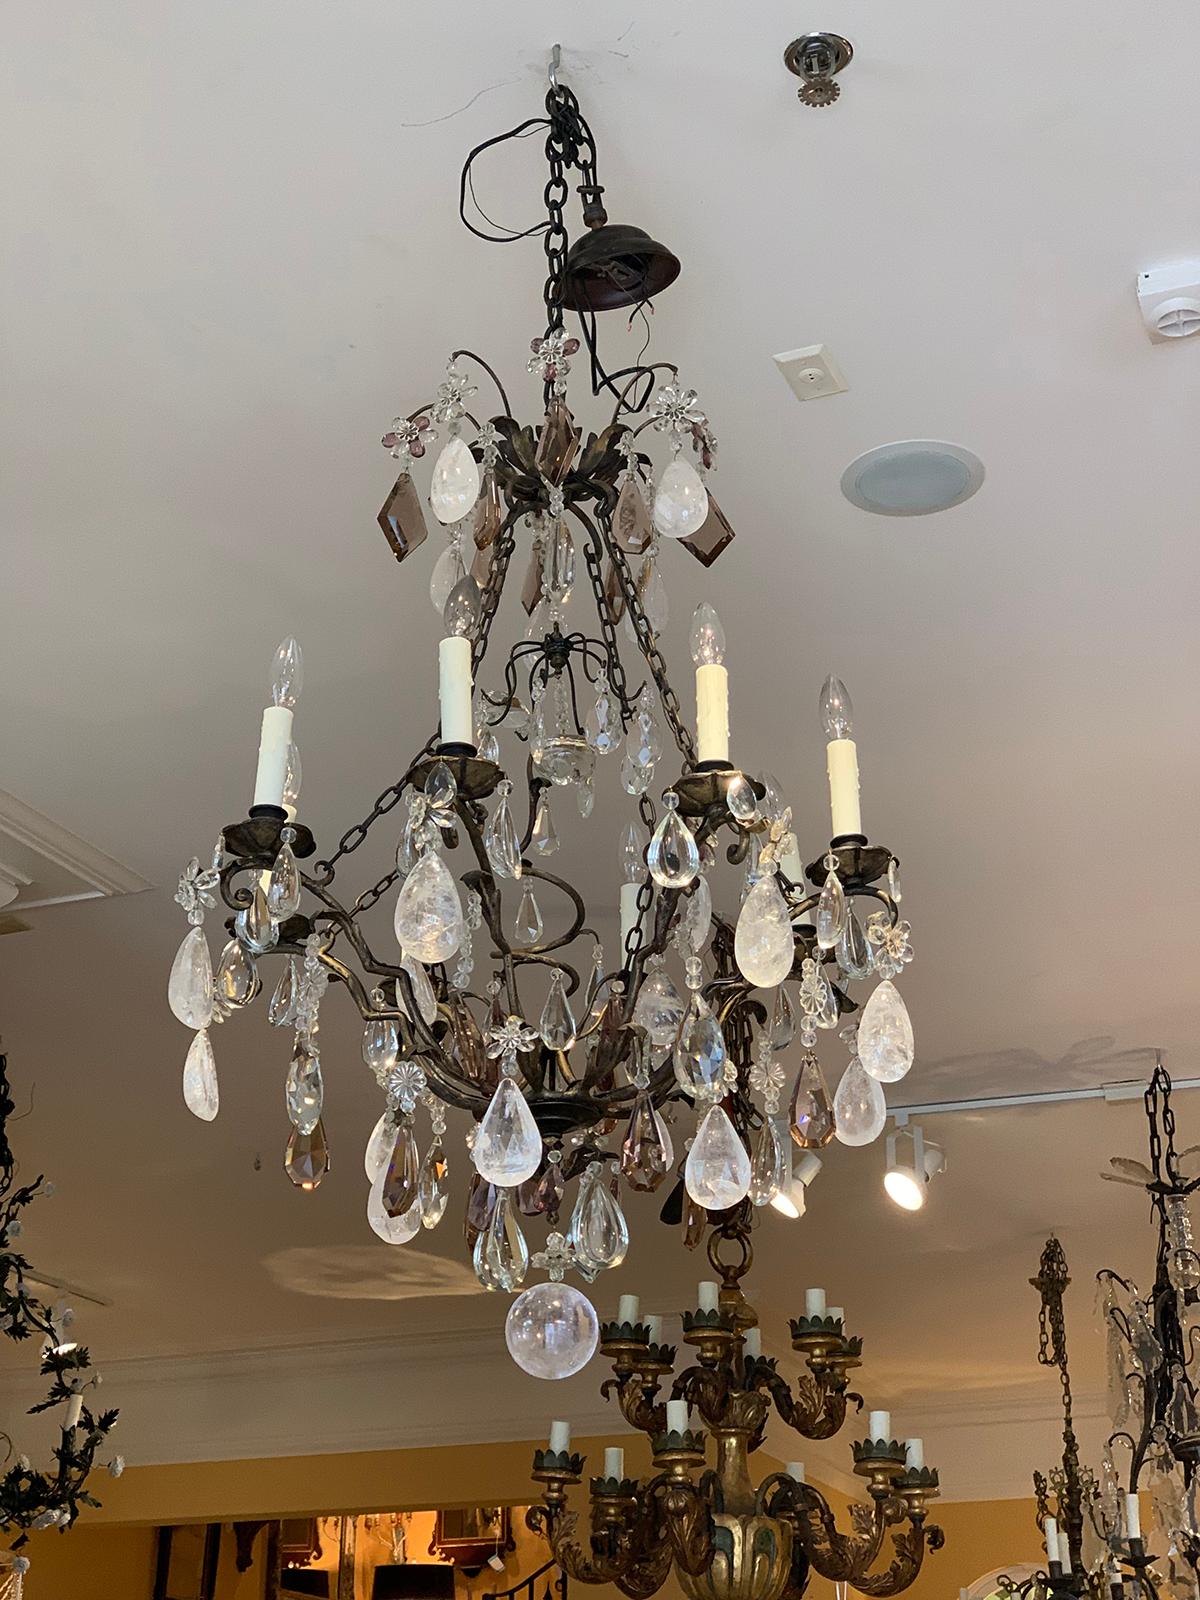 19th century eight-light rock crystal, amethyst chandelier, iron frame.
Brand new wiring.